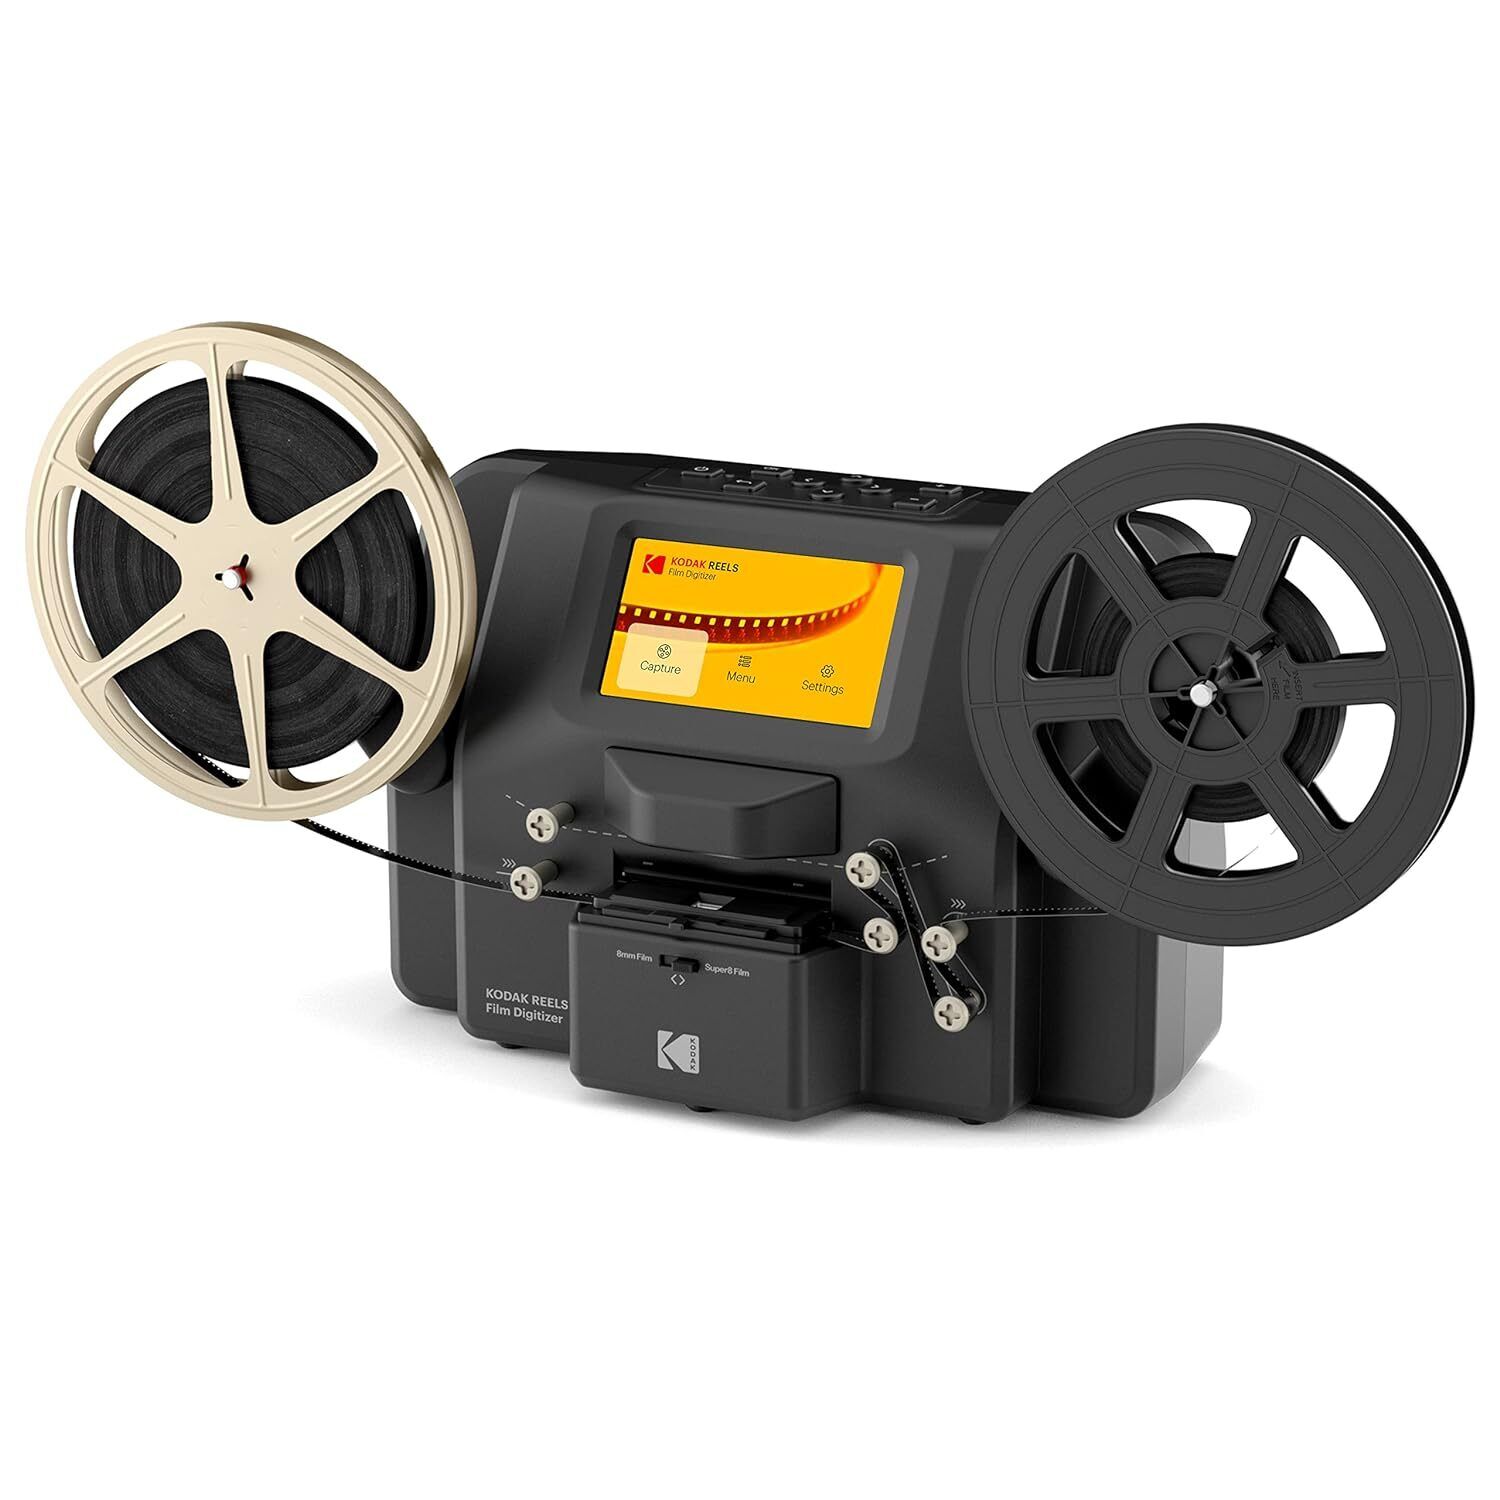 KODAK REELS 8mm & Super 8 Films Digitizer Converter with Big 5� Screen, Scanne